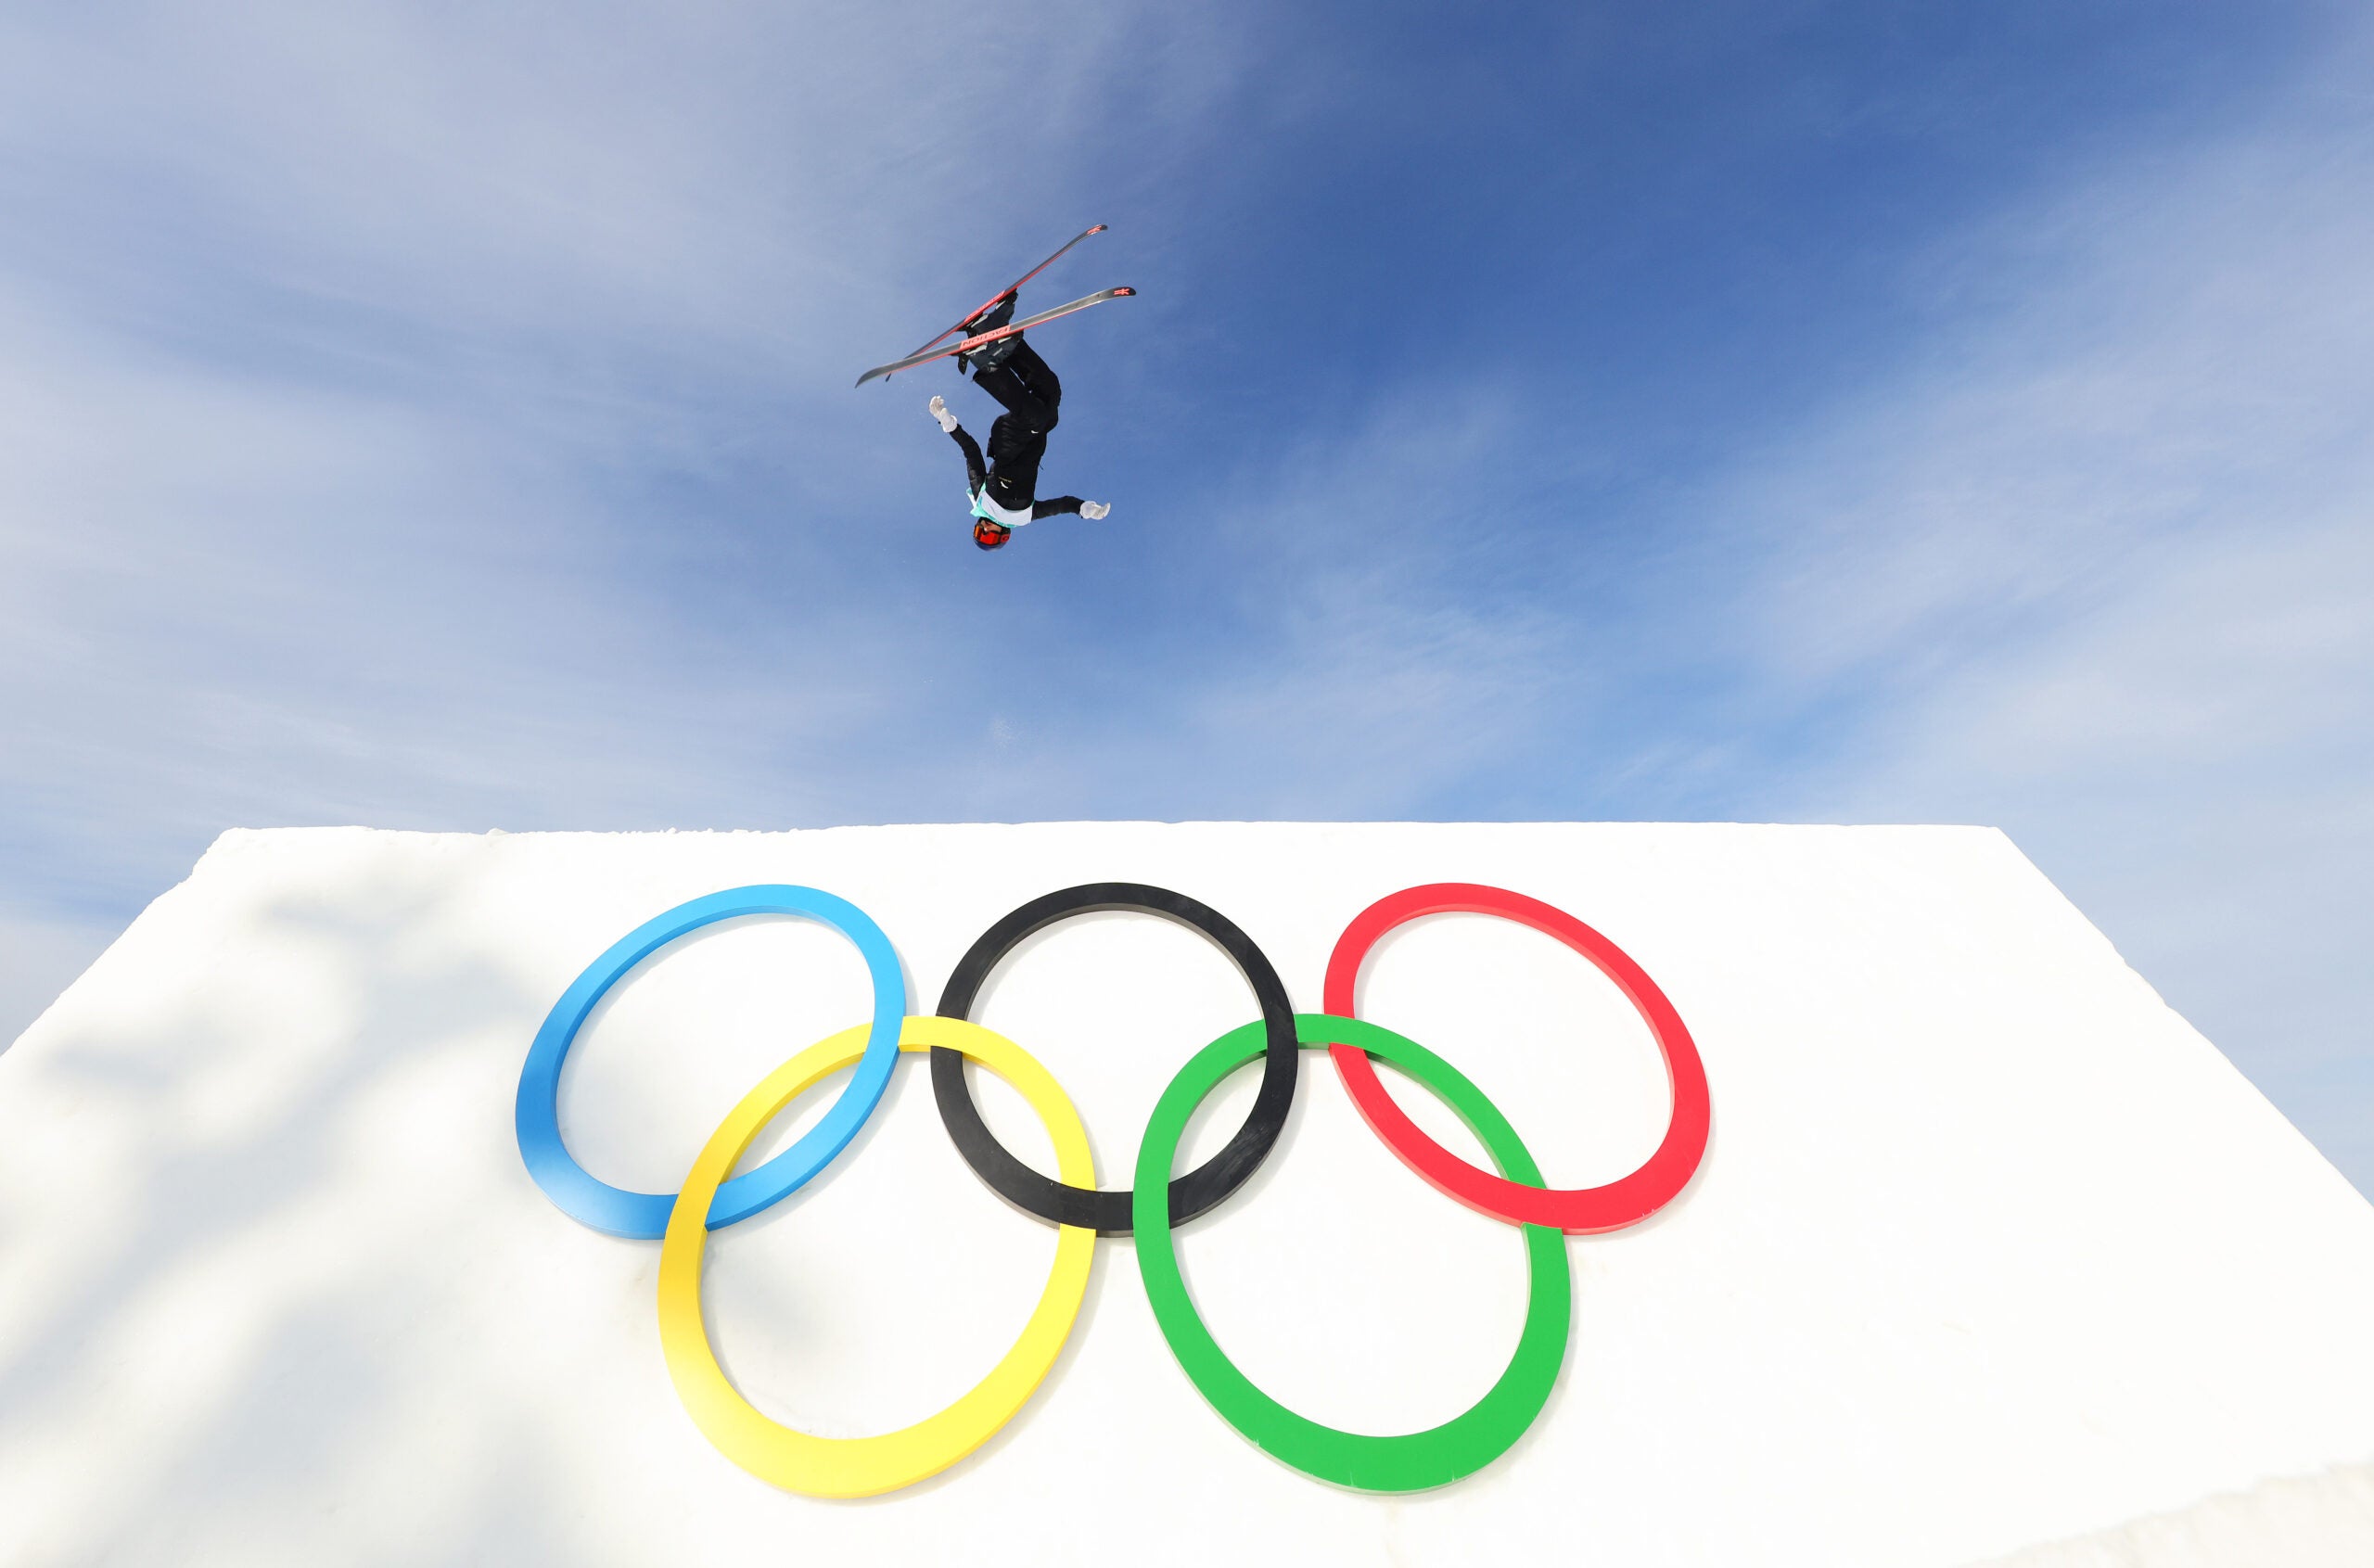 ⛷ Eileen Gu takes Freeski big air gold at #Beijing2022 🥇 